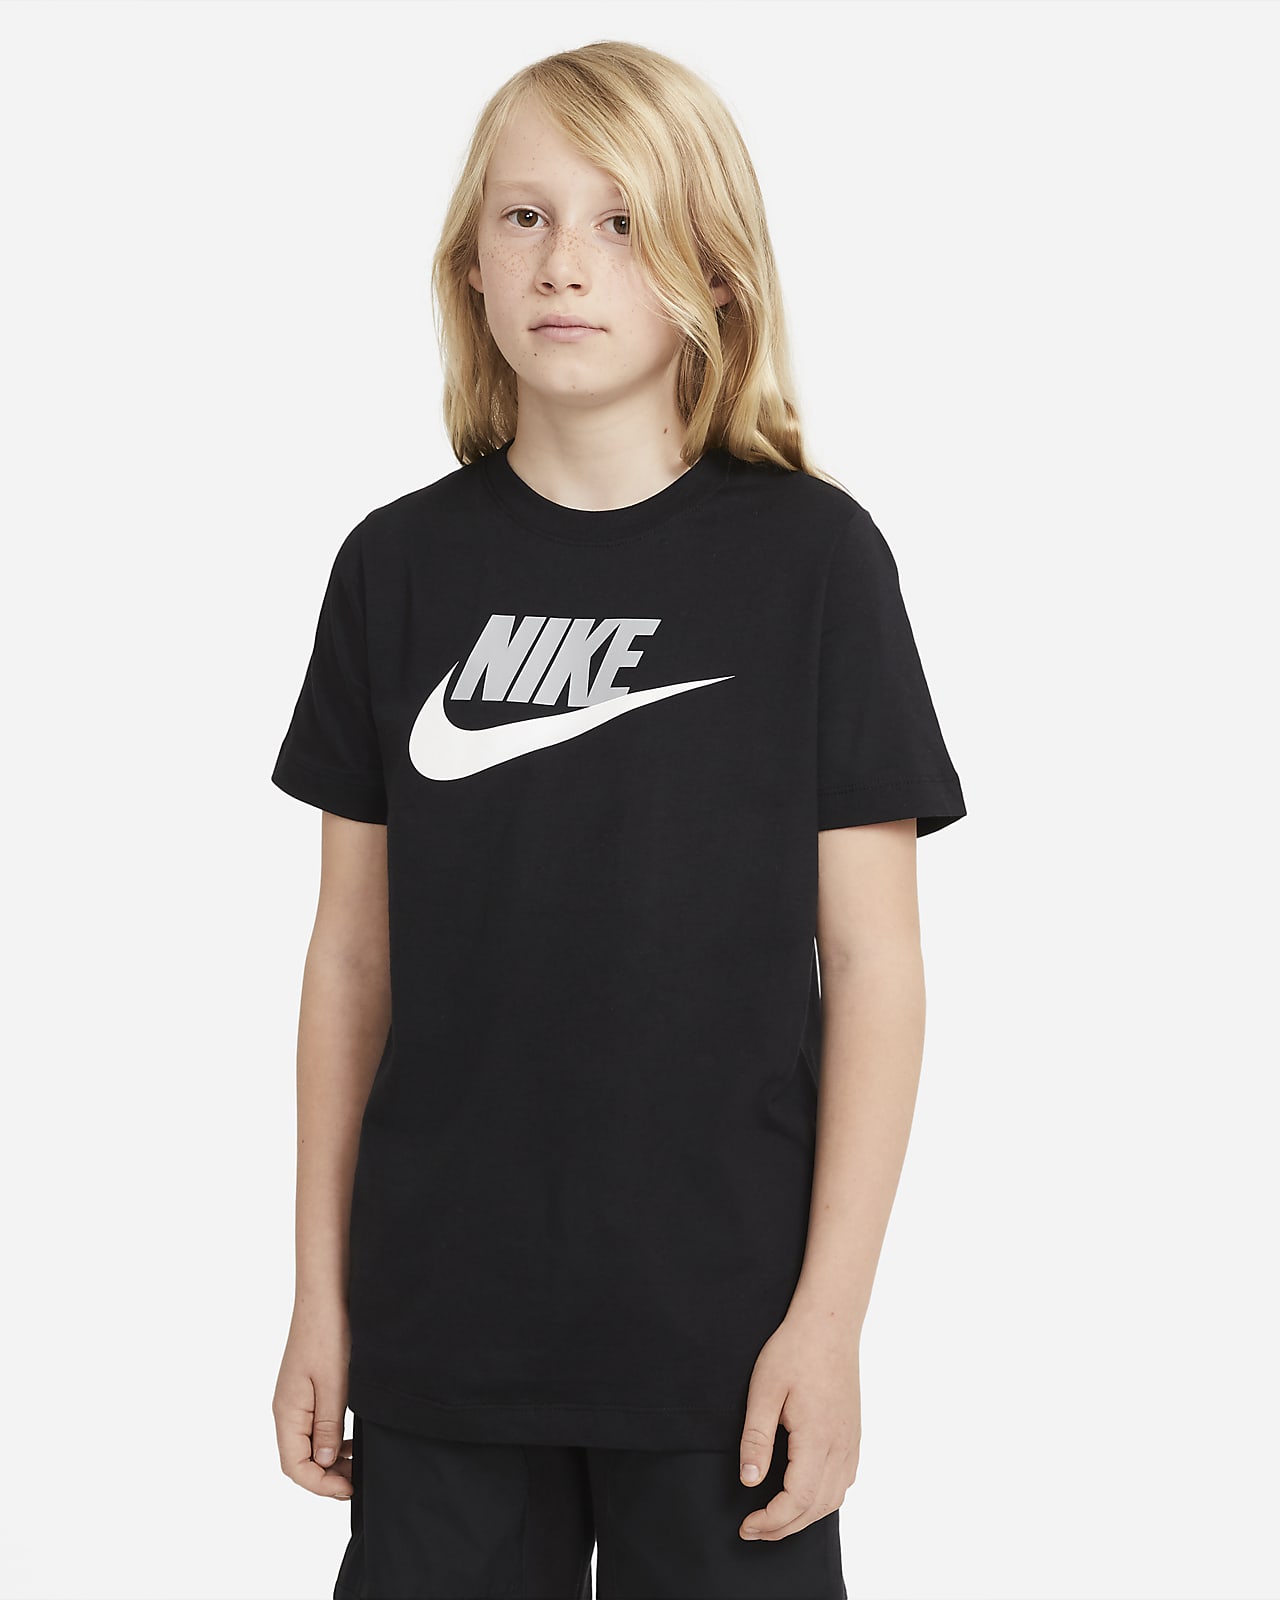 Bewolkt Wet en regelgeving Observatorium Nike Sportswear Katoenen T-shirt voor kids. Nike NL